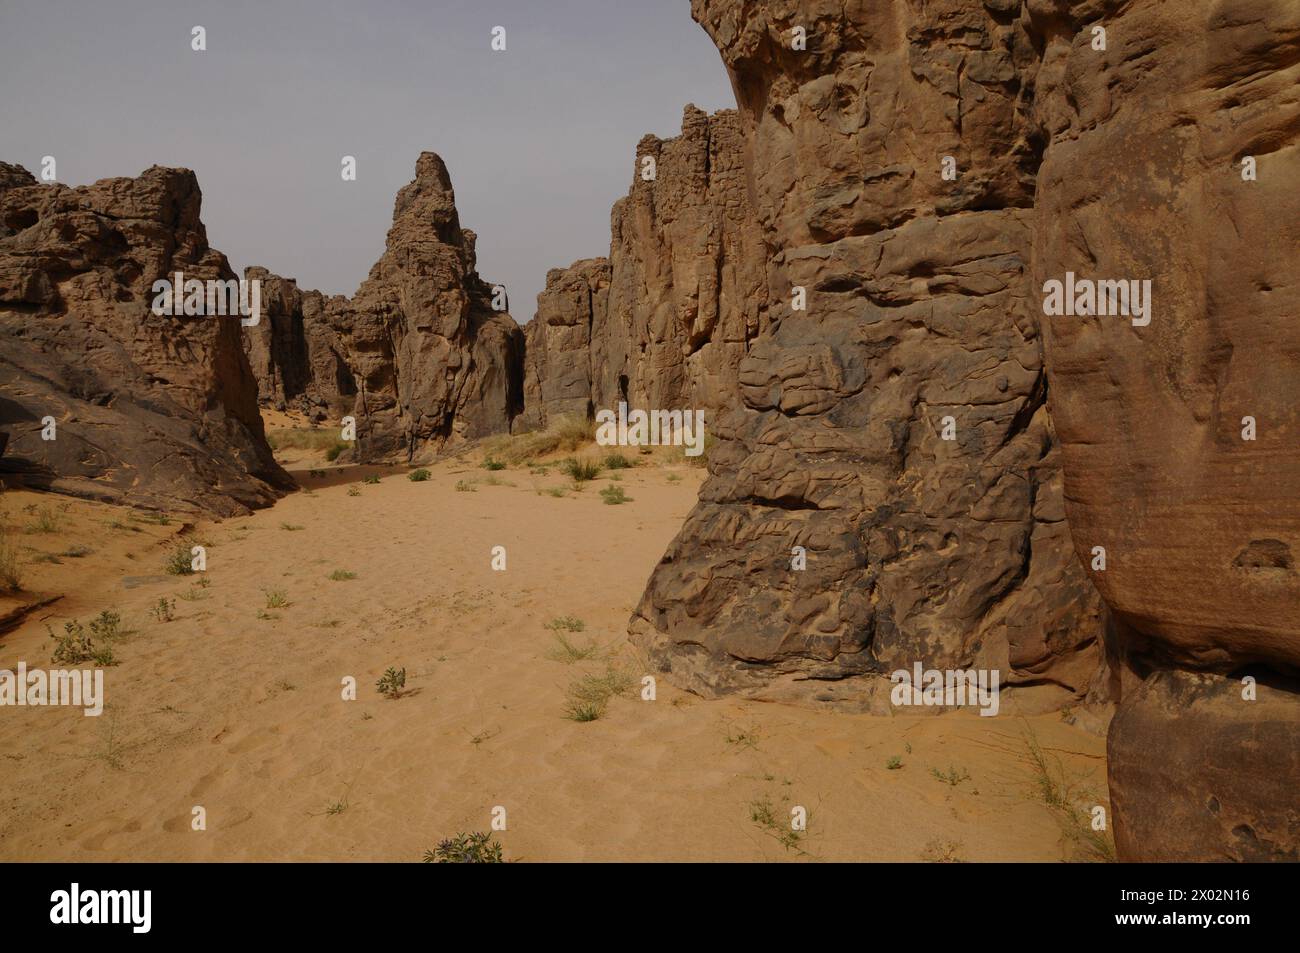 Bizarre Welt der seltsamen Felsformationen von Meghedet (Magatgat) (Meggedet), Fezzan, Libyen, Nordafrika, Afrika Stockfoto